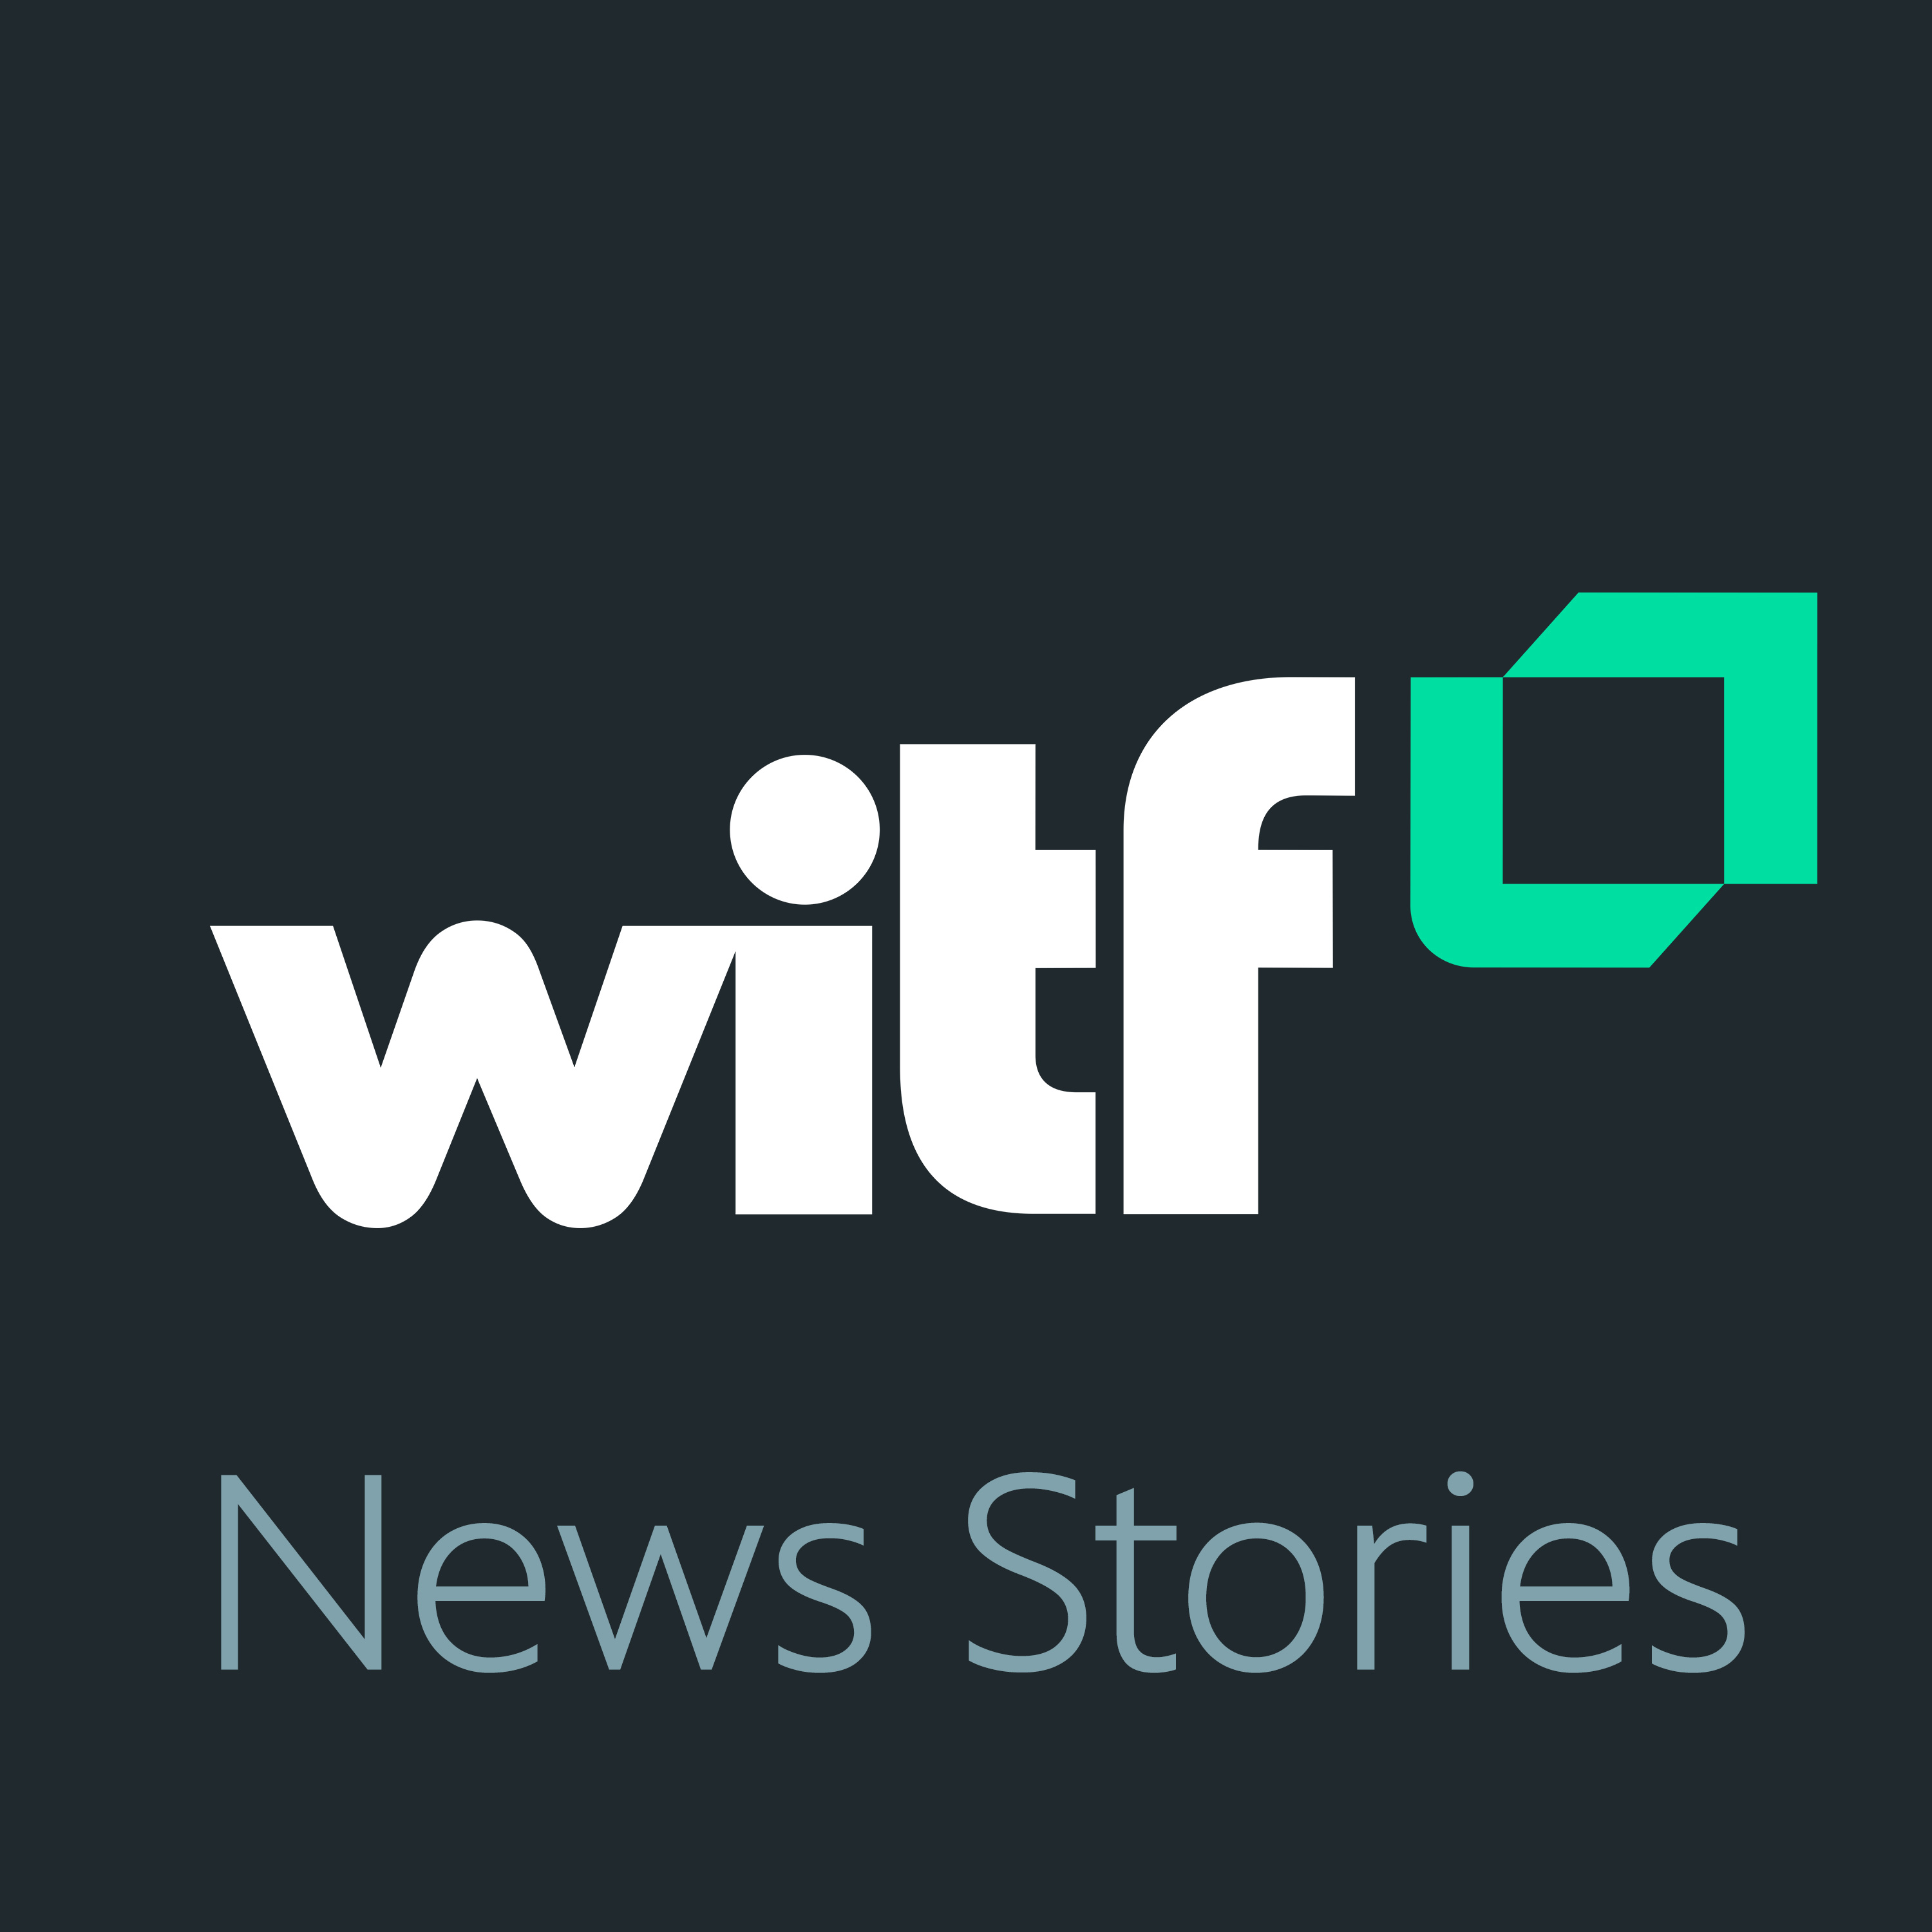 WITF News Stories